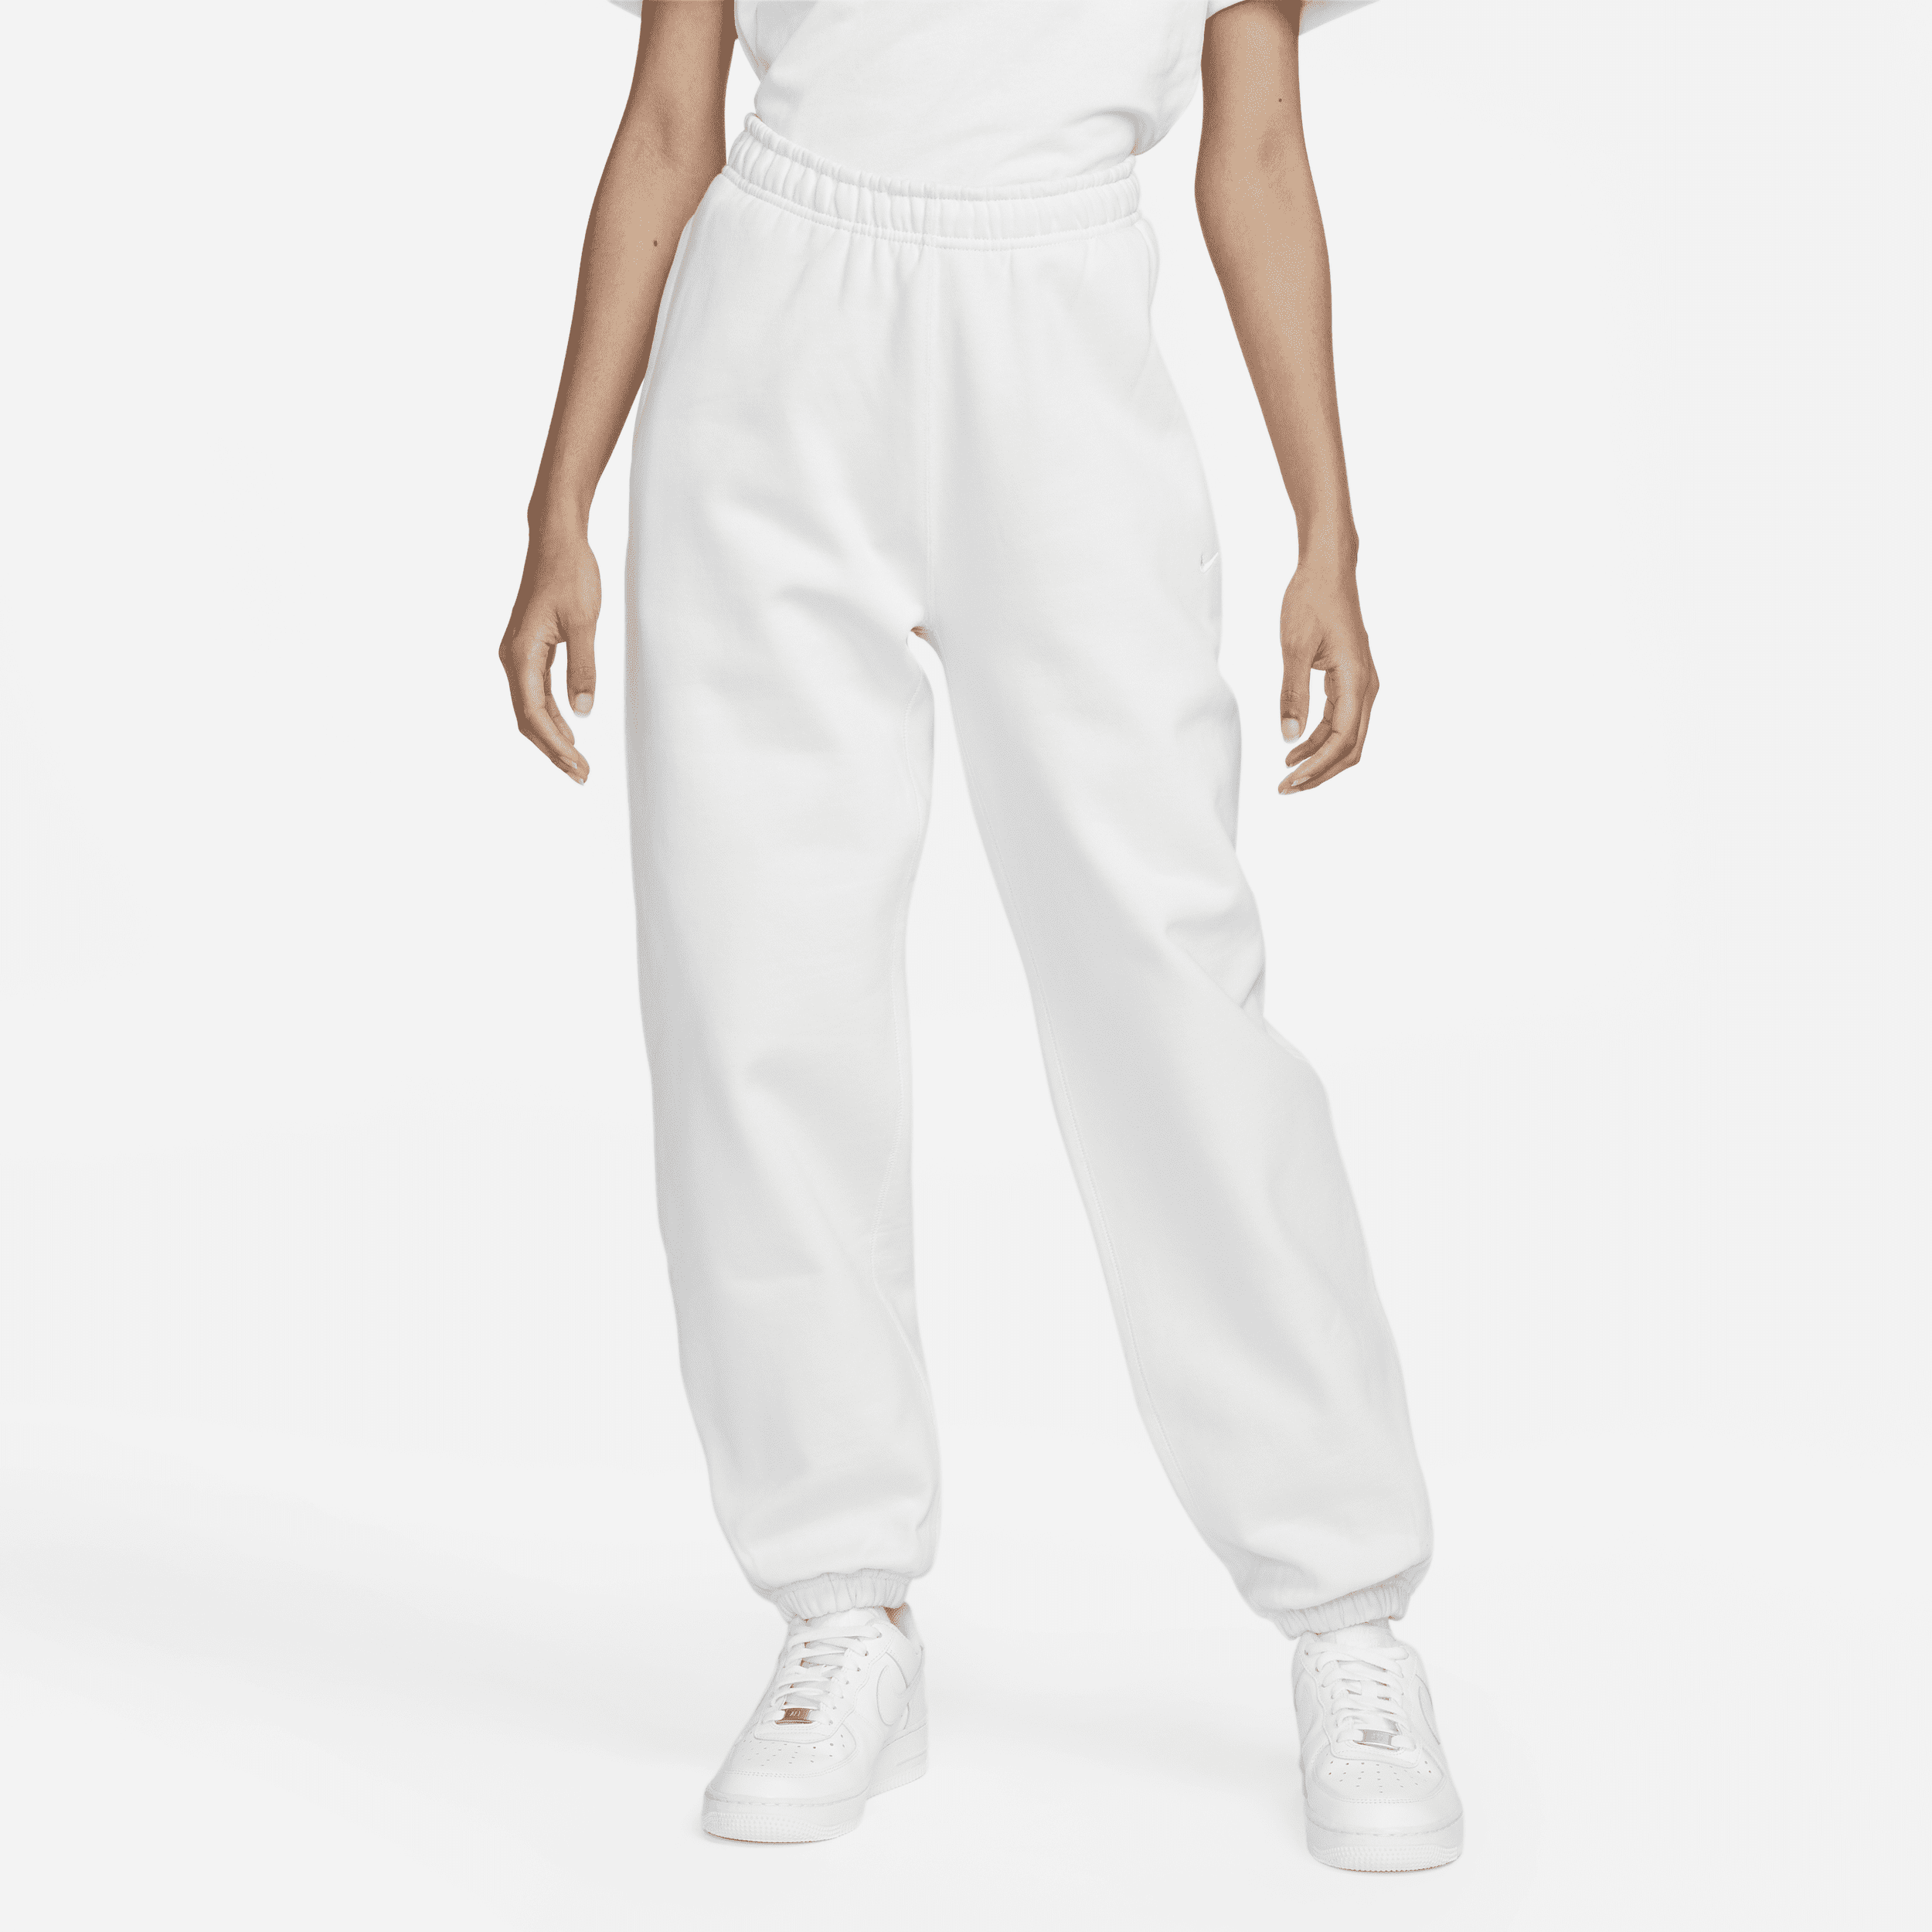 Nike Solo Swoosh Pantalón de tejido Fleece - Mujer - Gris